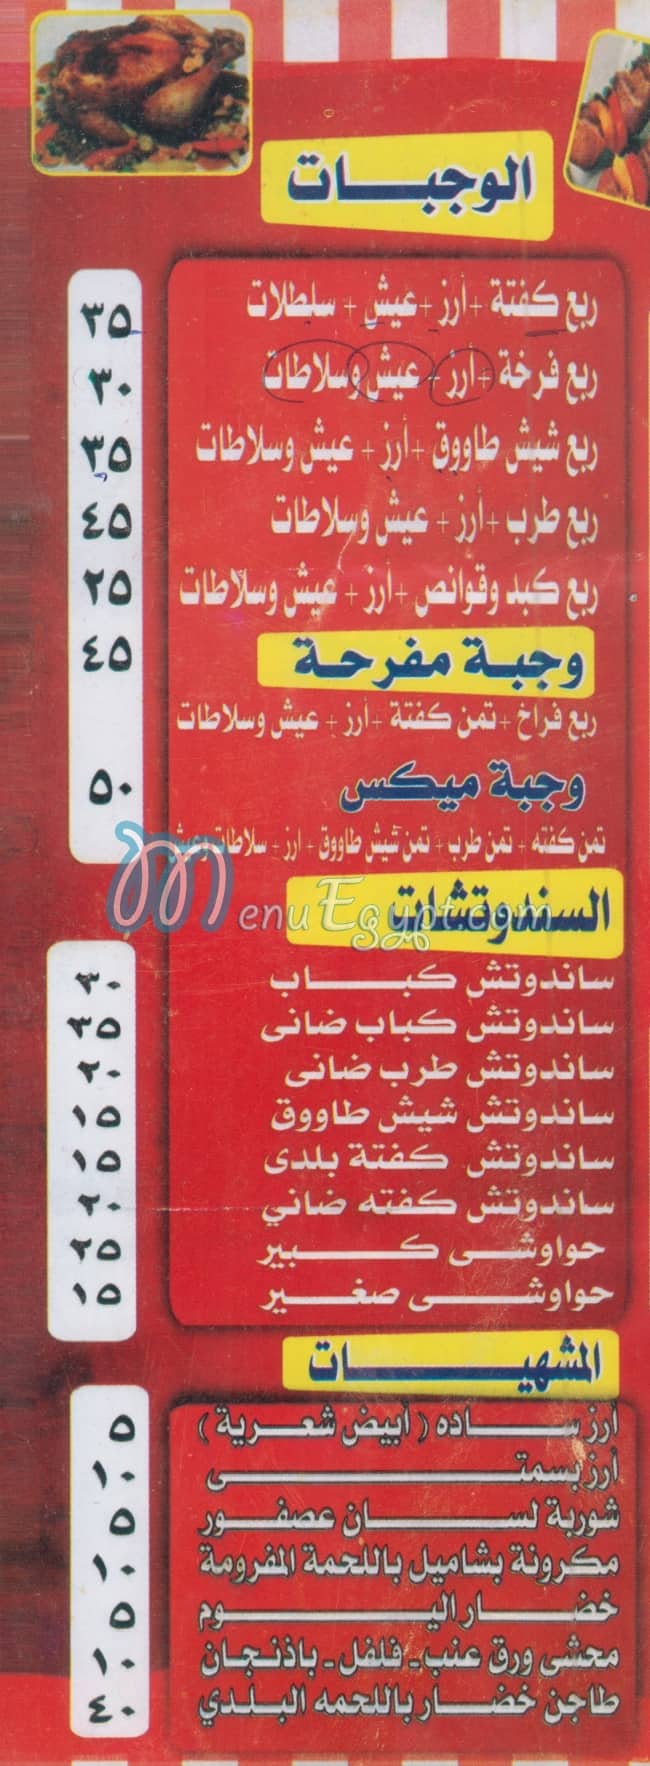 El Akeel Restaurant menu Egypt